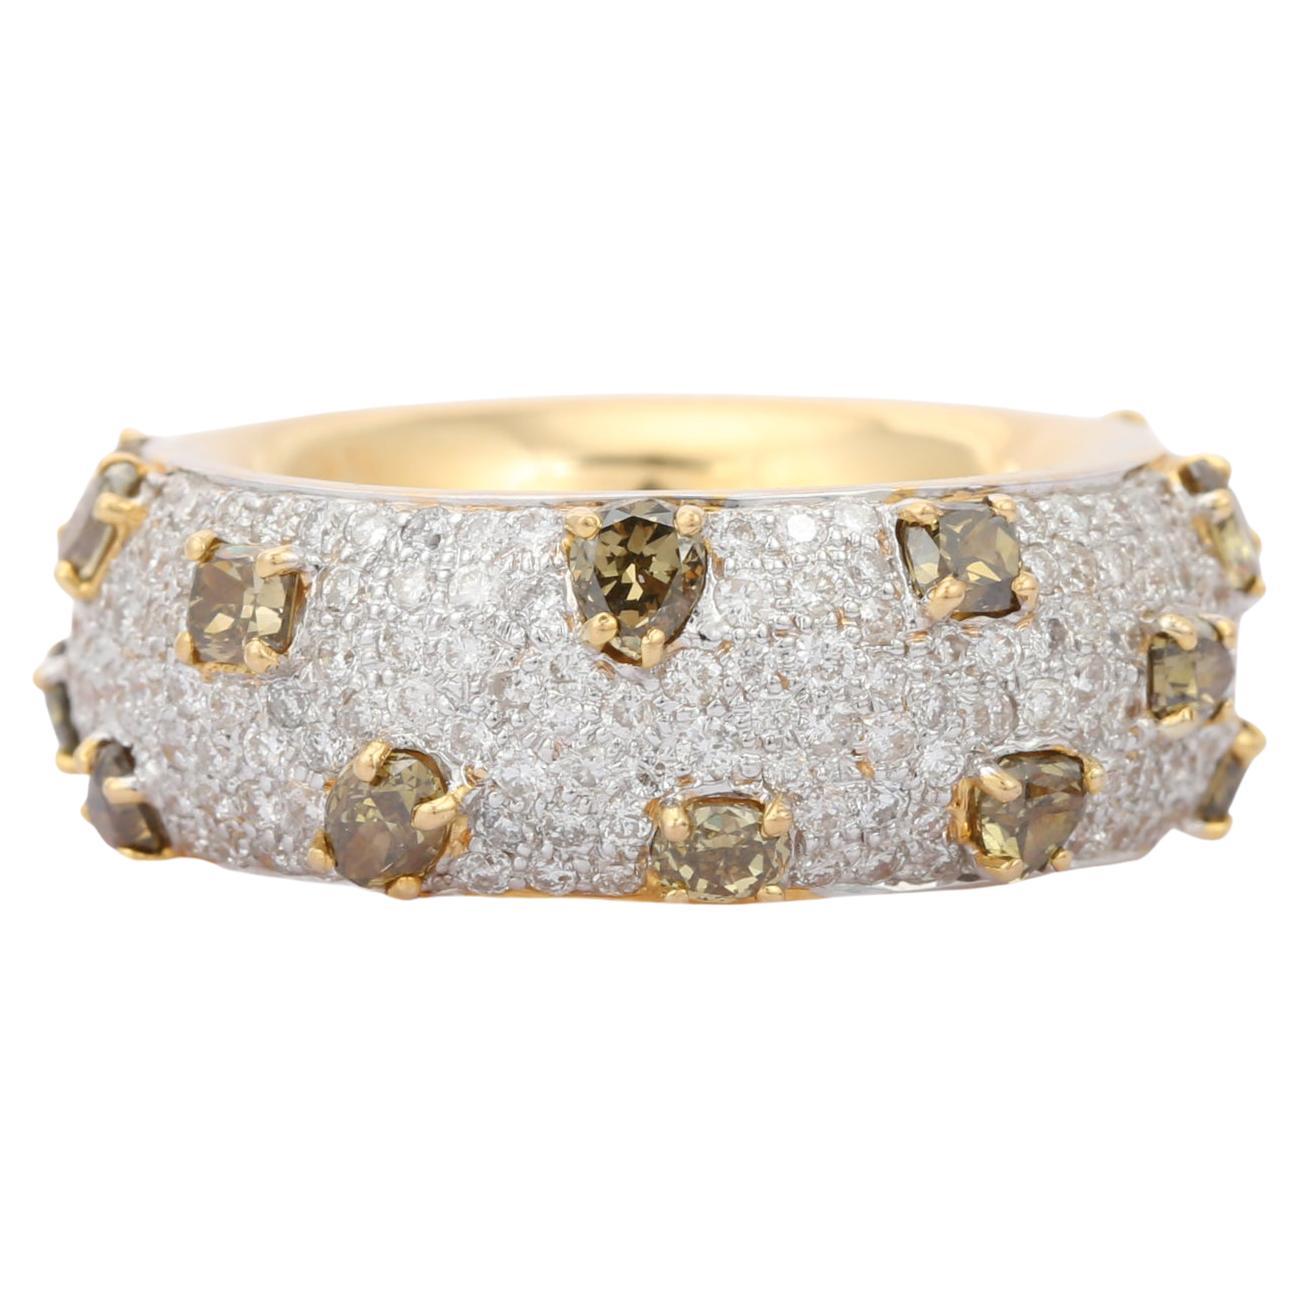 For Sale:  18 Karat Solid Yellow Gold 6.3 Carats Diamond Wedding Band Ring